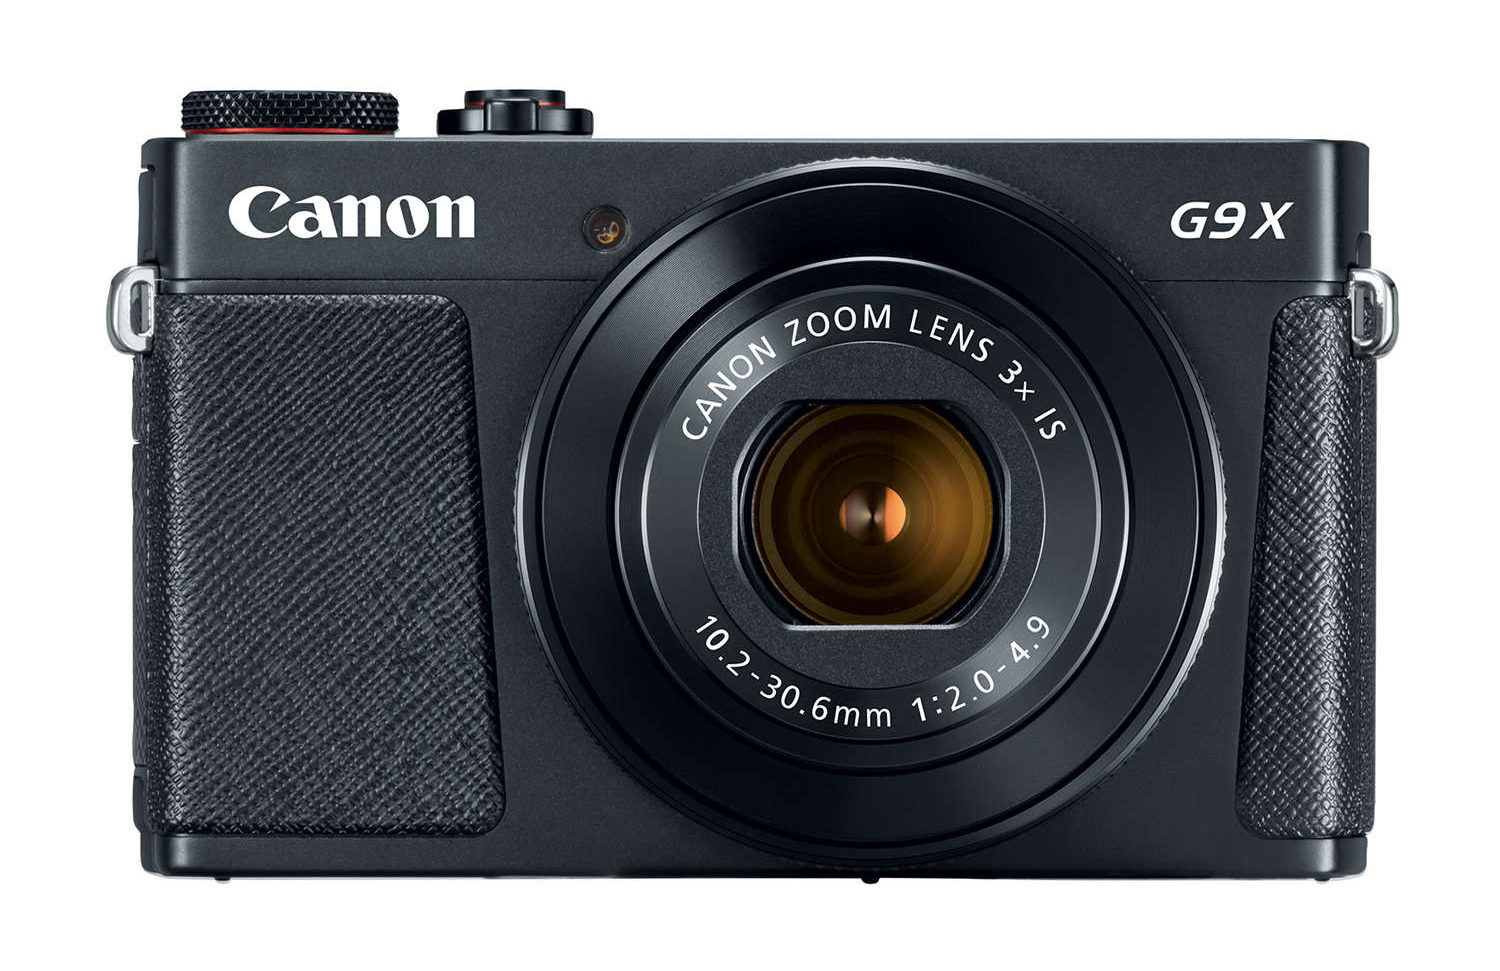 The Canon PowerShot G9 X Mark II has impressive image quality, Imaging